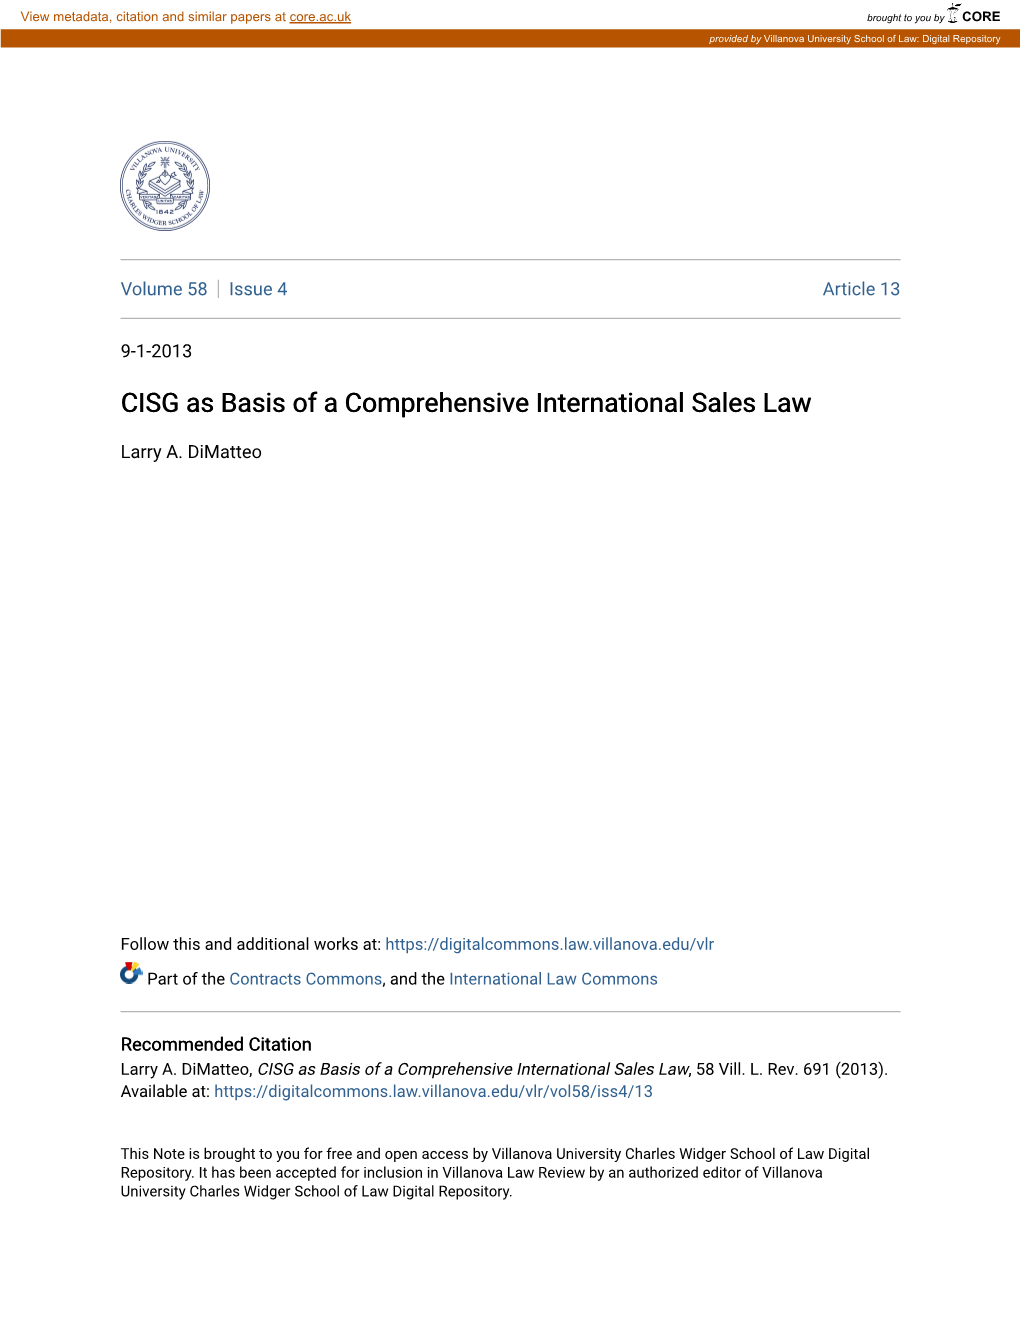 CISG As Basis of a Comprehensive International Sales Law